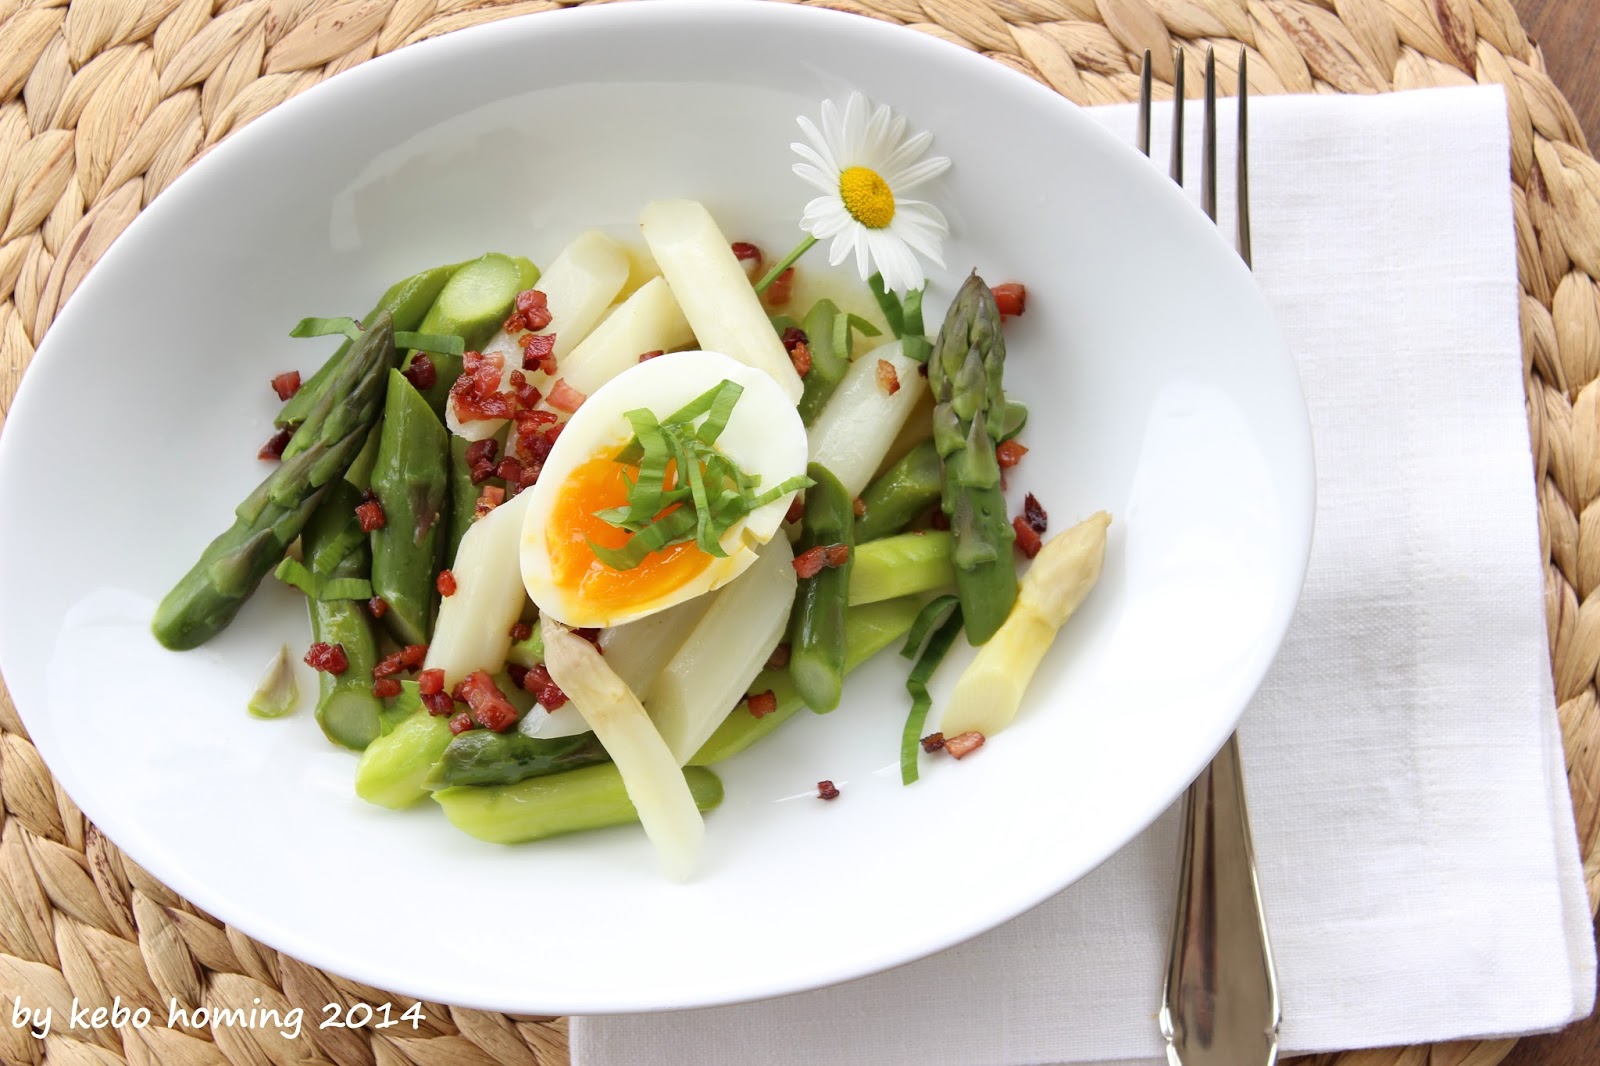 kebo homing - der Südtiroler Food- und Lifestyleblog : Sunday Lunch ...